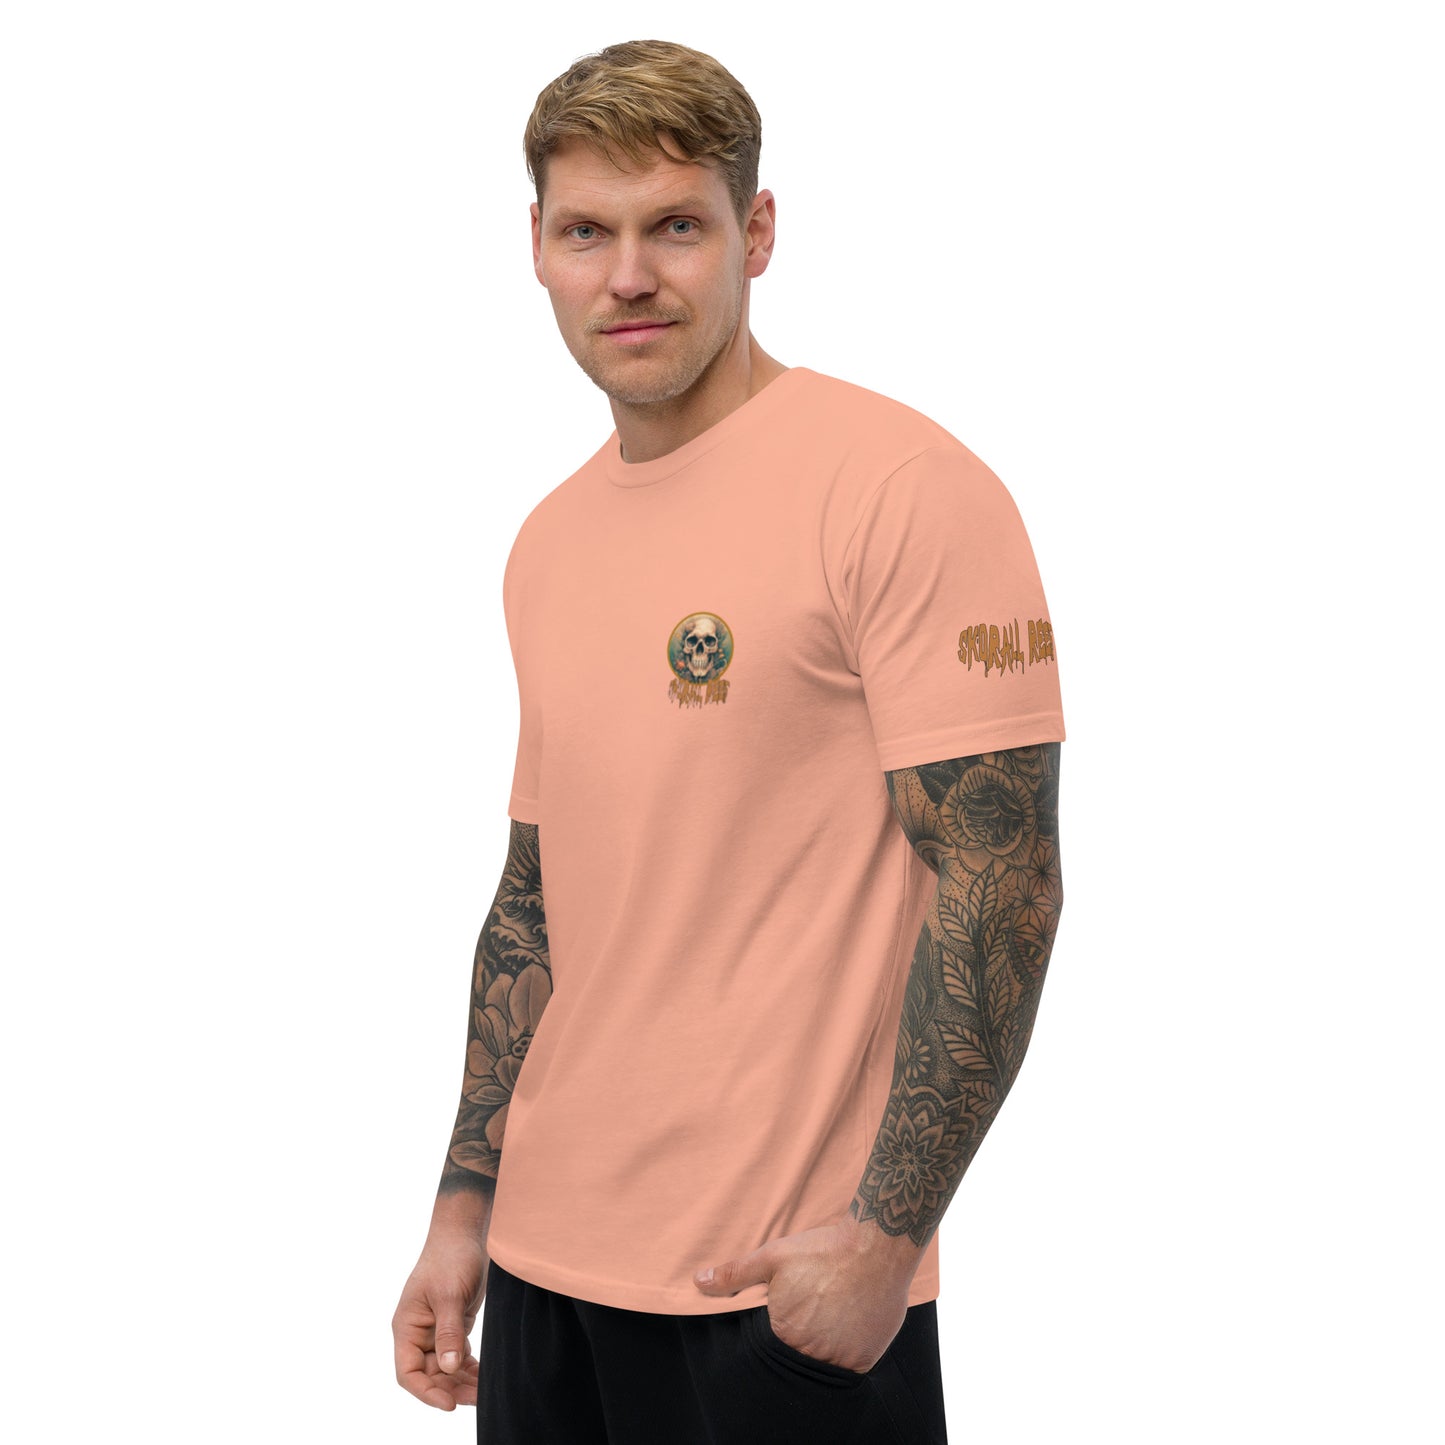 Skorall Reef S/S Men's Premium T-shirt